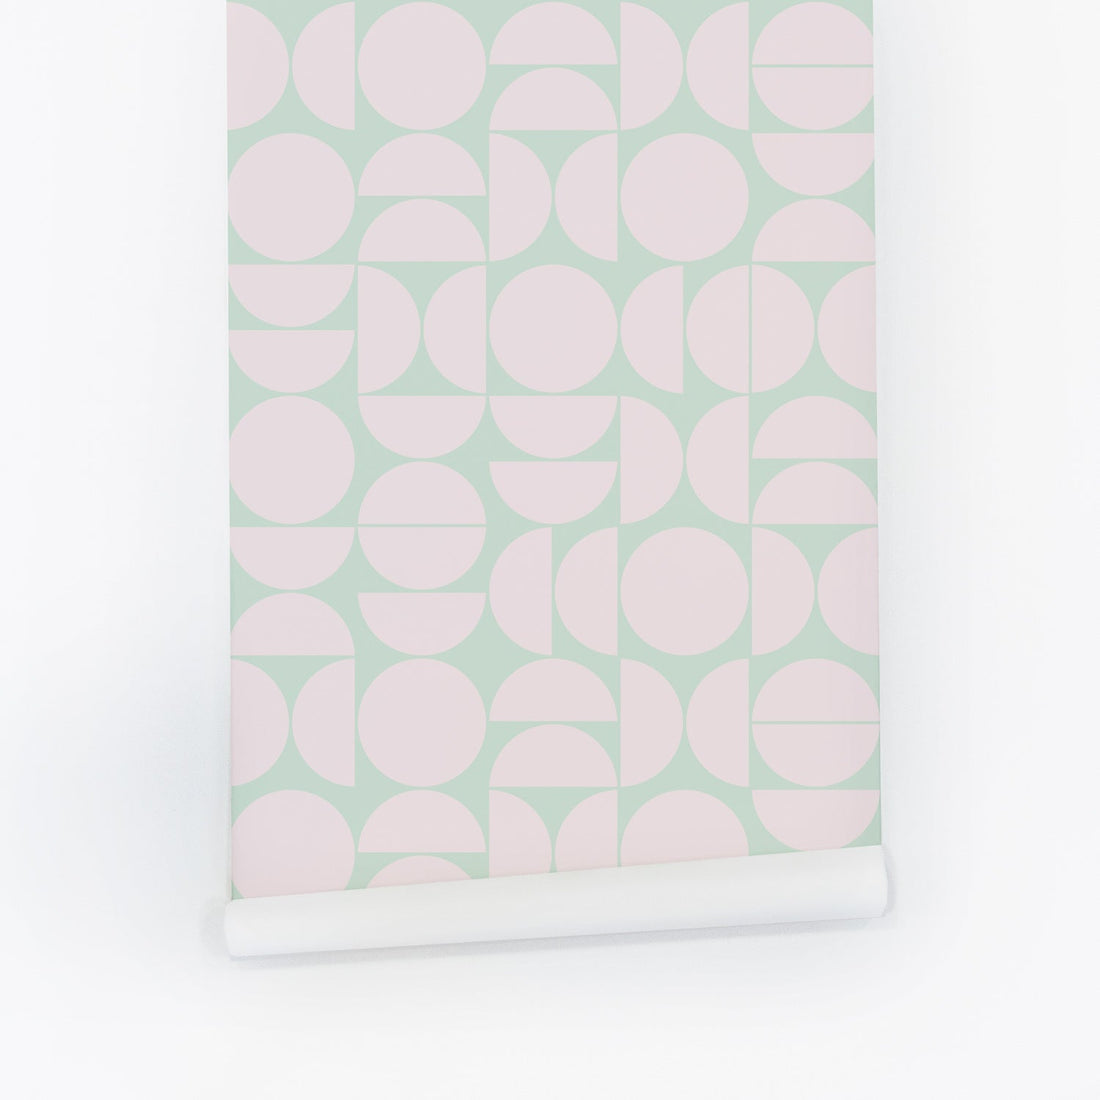 pastel color geometric shapes pattern removable wallpaper